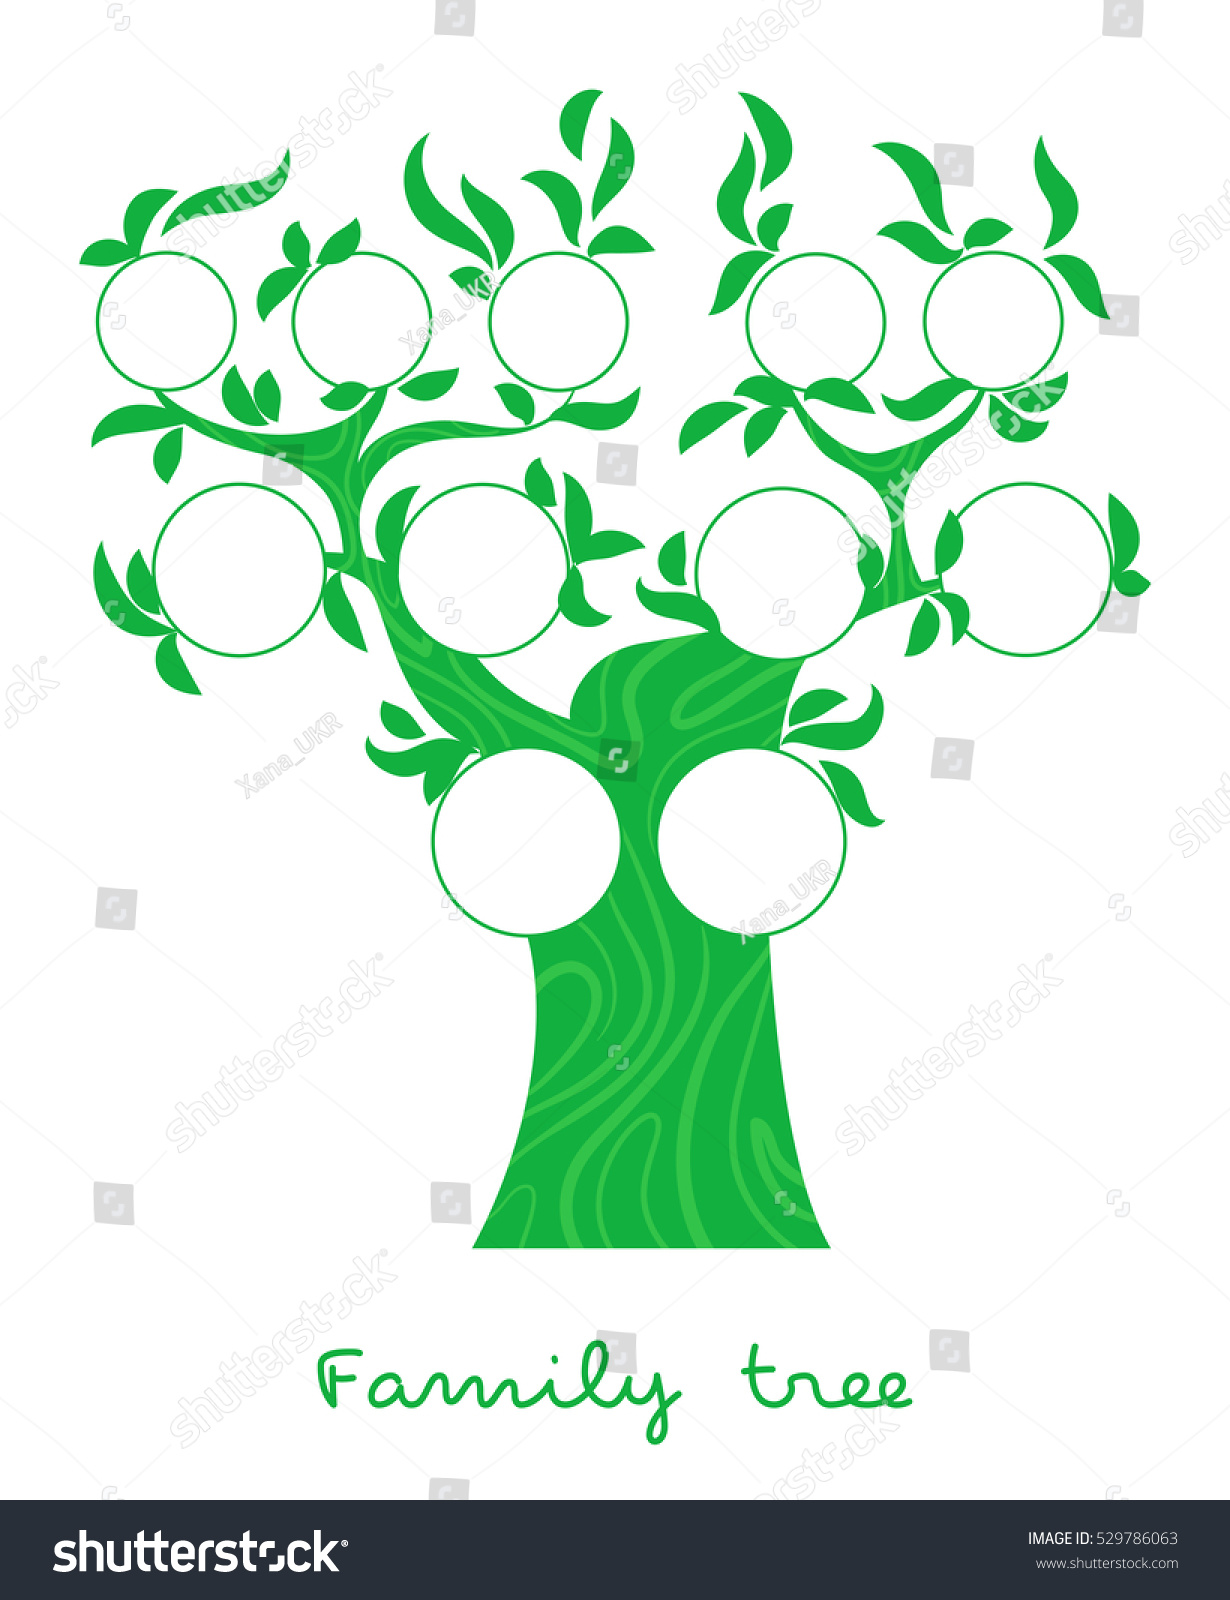 Edit Vectors Free Online - Family tree | Shutterstock Editor